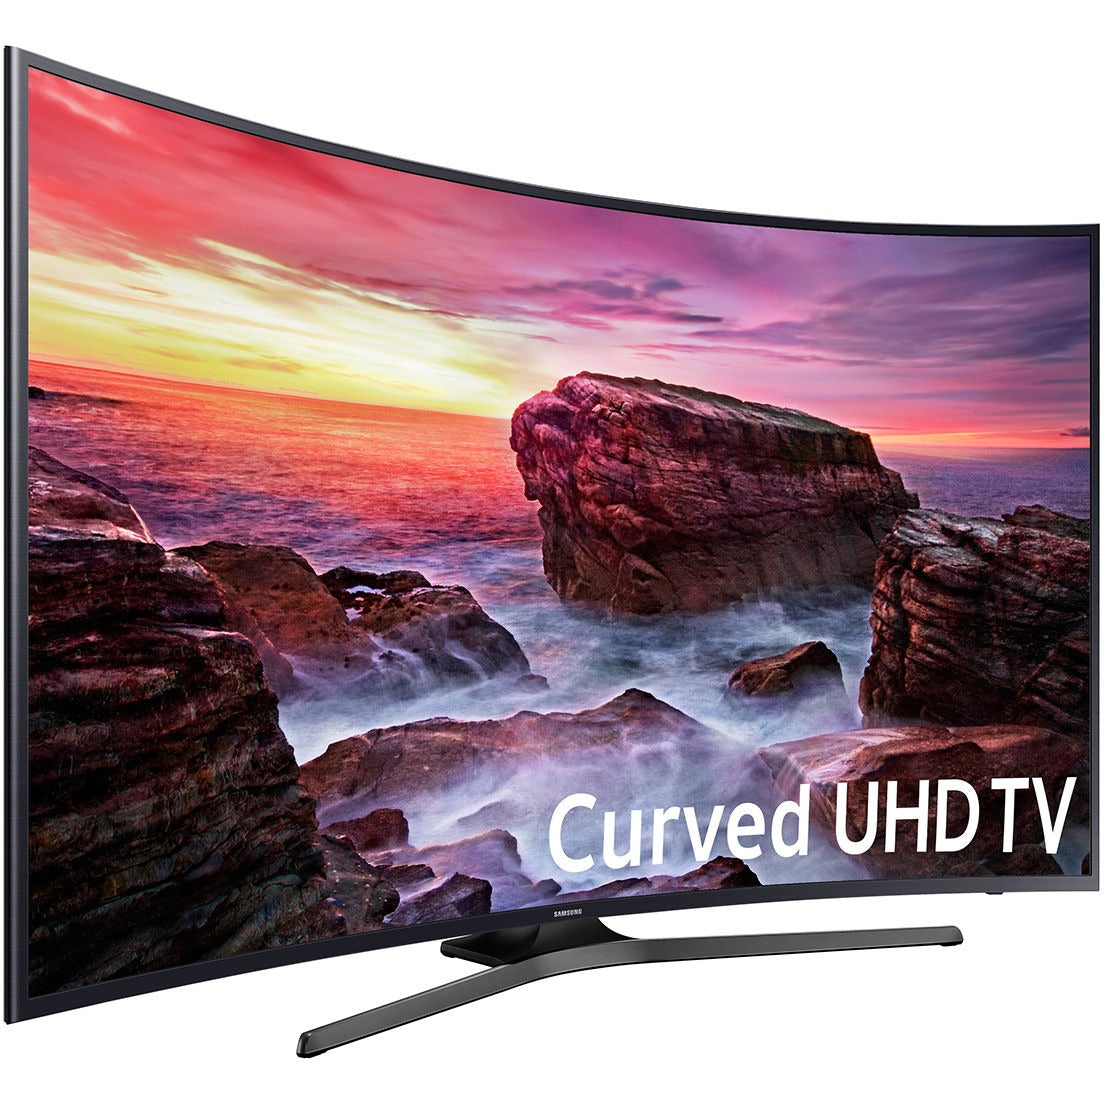 Samsung 6490 UN55MU6490 54.6" 2160p Curved Screen LED-LCD TV - 16:9 - 4K UHDTV - Black, Dark Titan